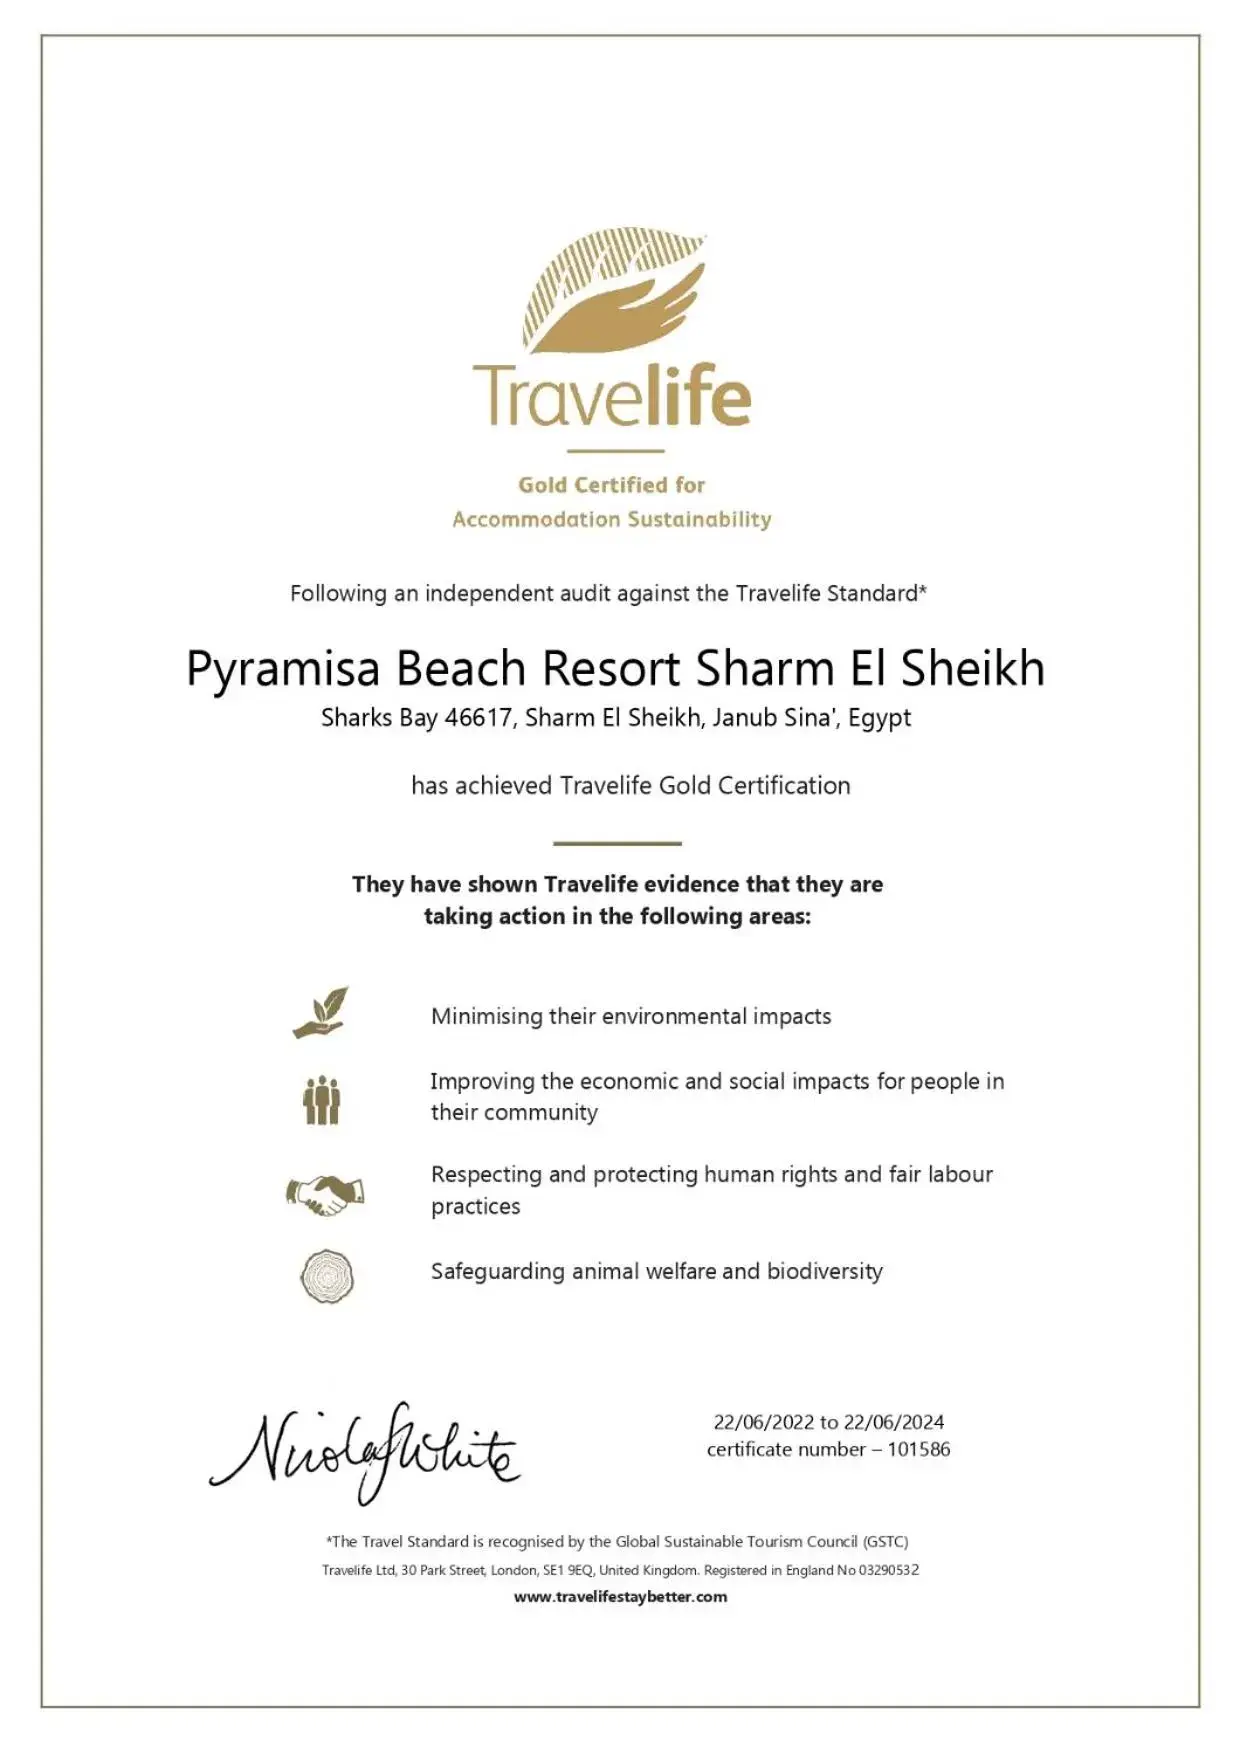 Certificate/Award in Pyramisa Beach Resort Sharm El Sheikh